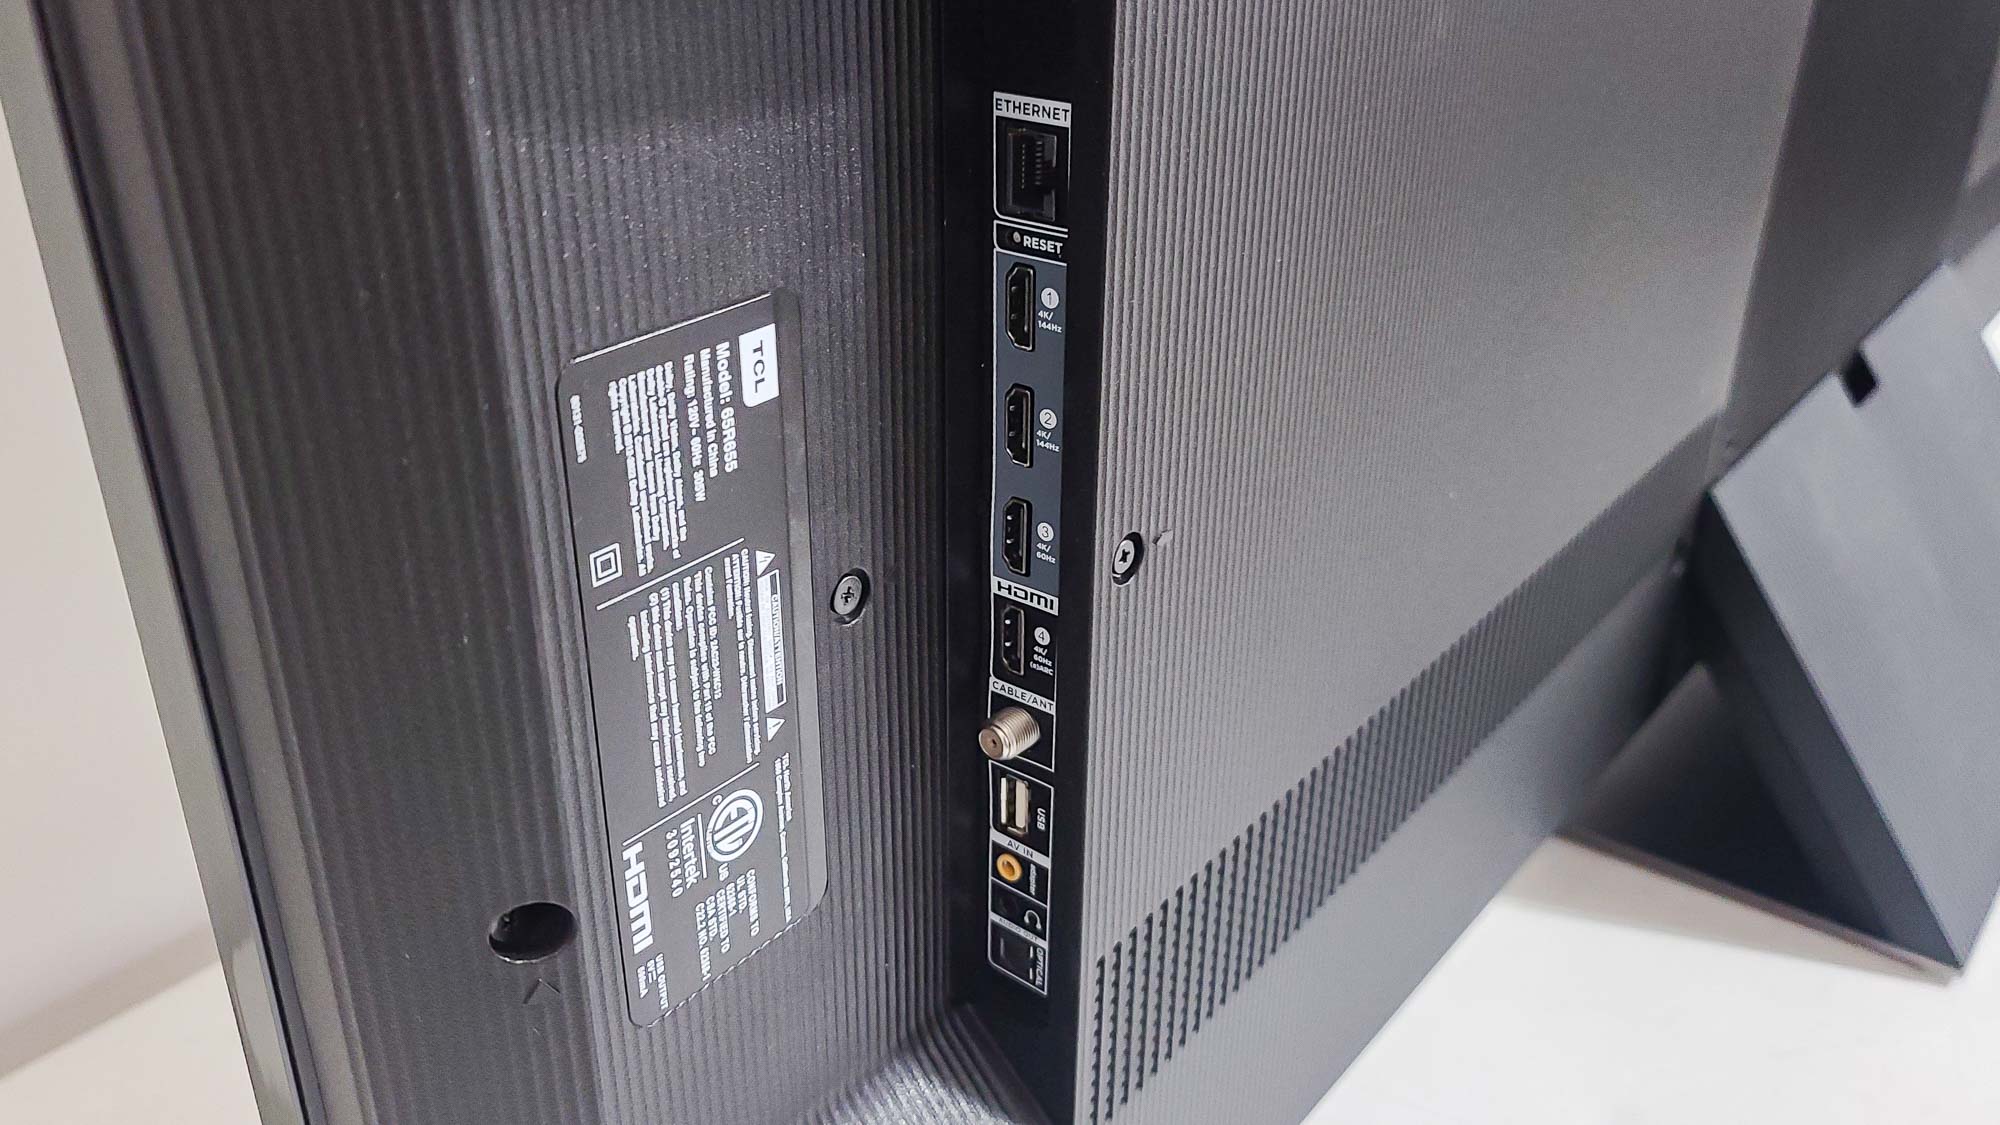 TCL 6-Series Roku TV (65R655) ports